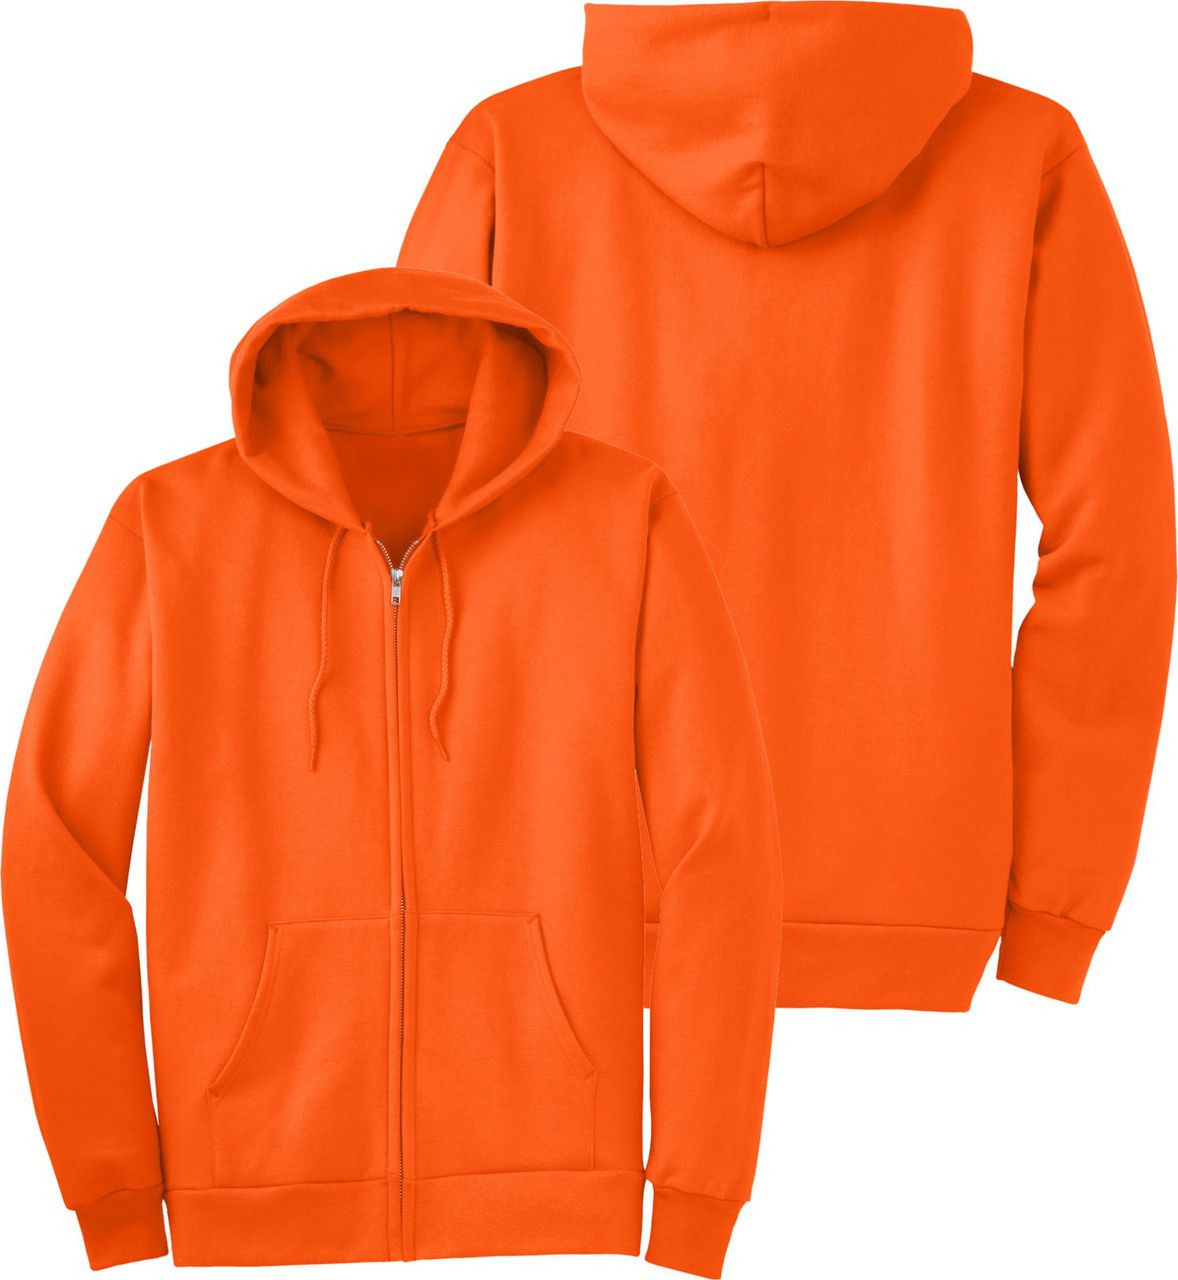 SCHAMPA Old School Thermal Fleece Lined Hoodie: Safety Neon Orange